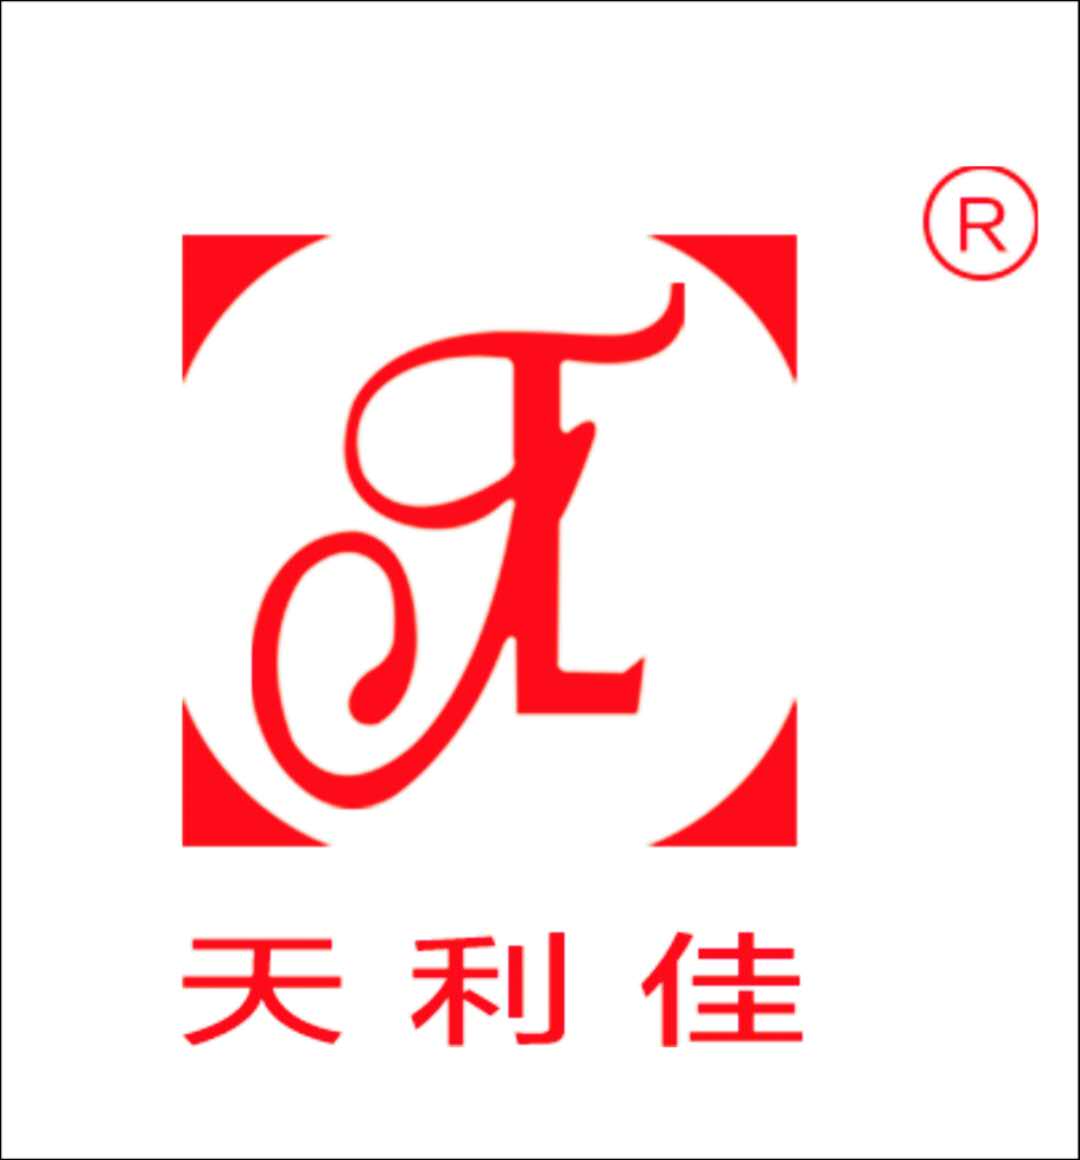 Shenzhen shunfa ji stainless steel products co. LTD